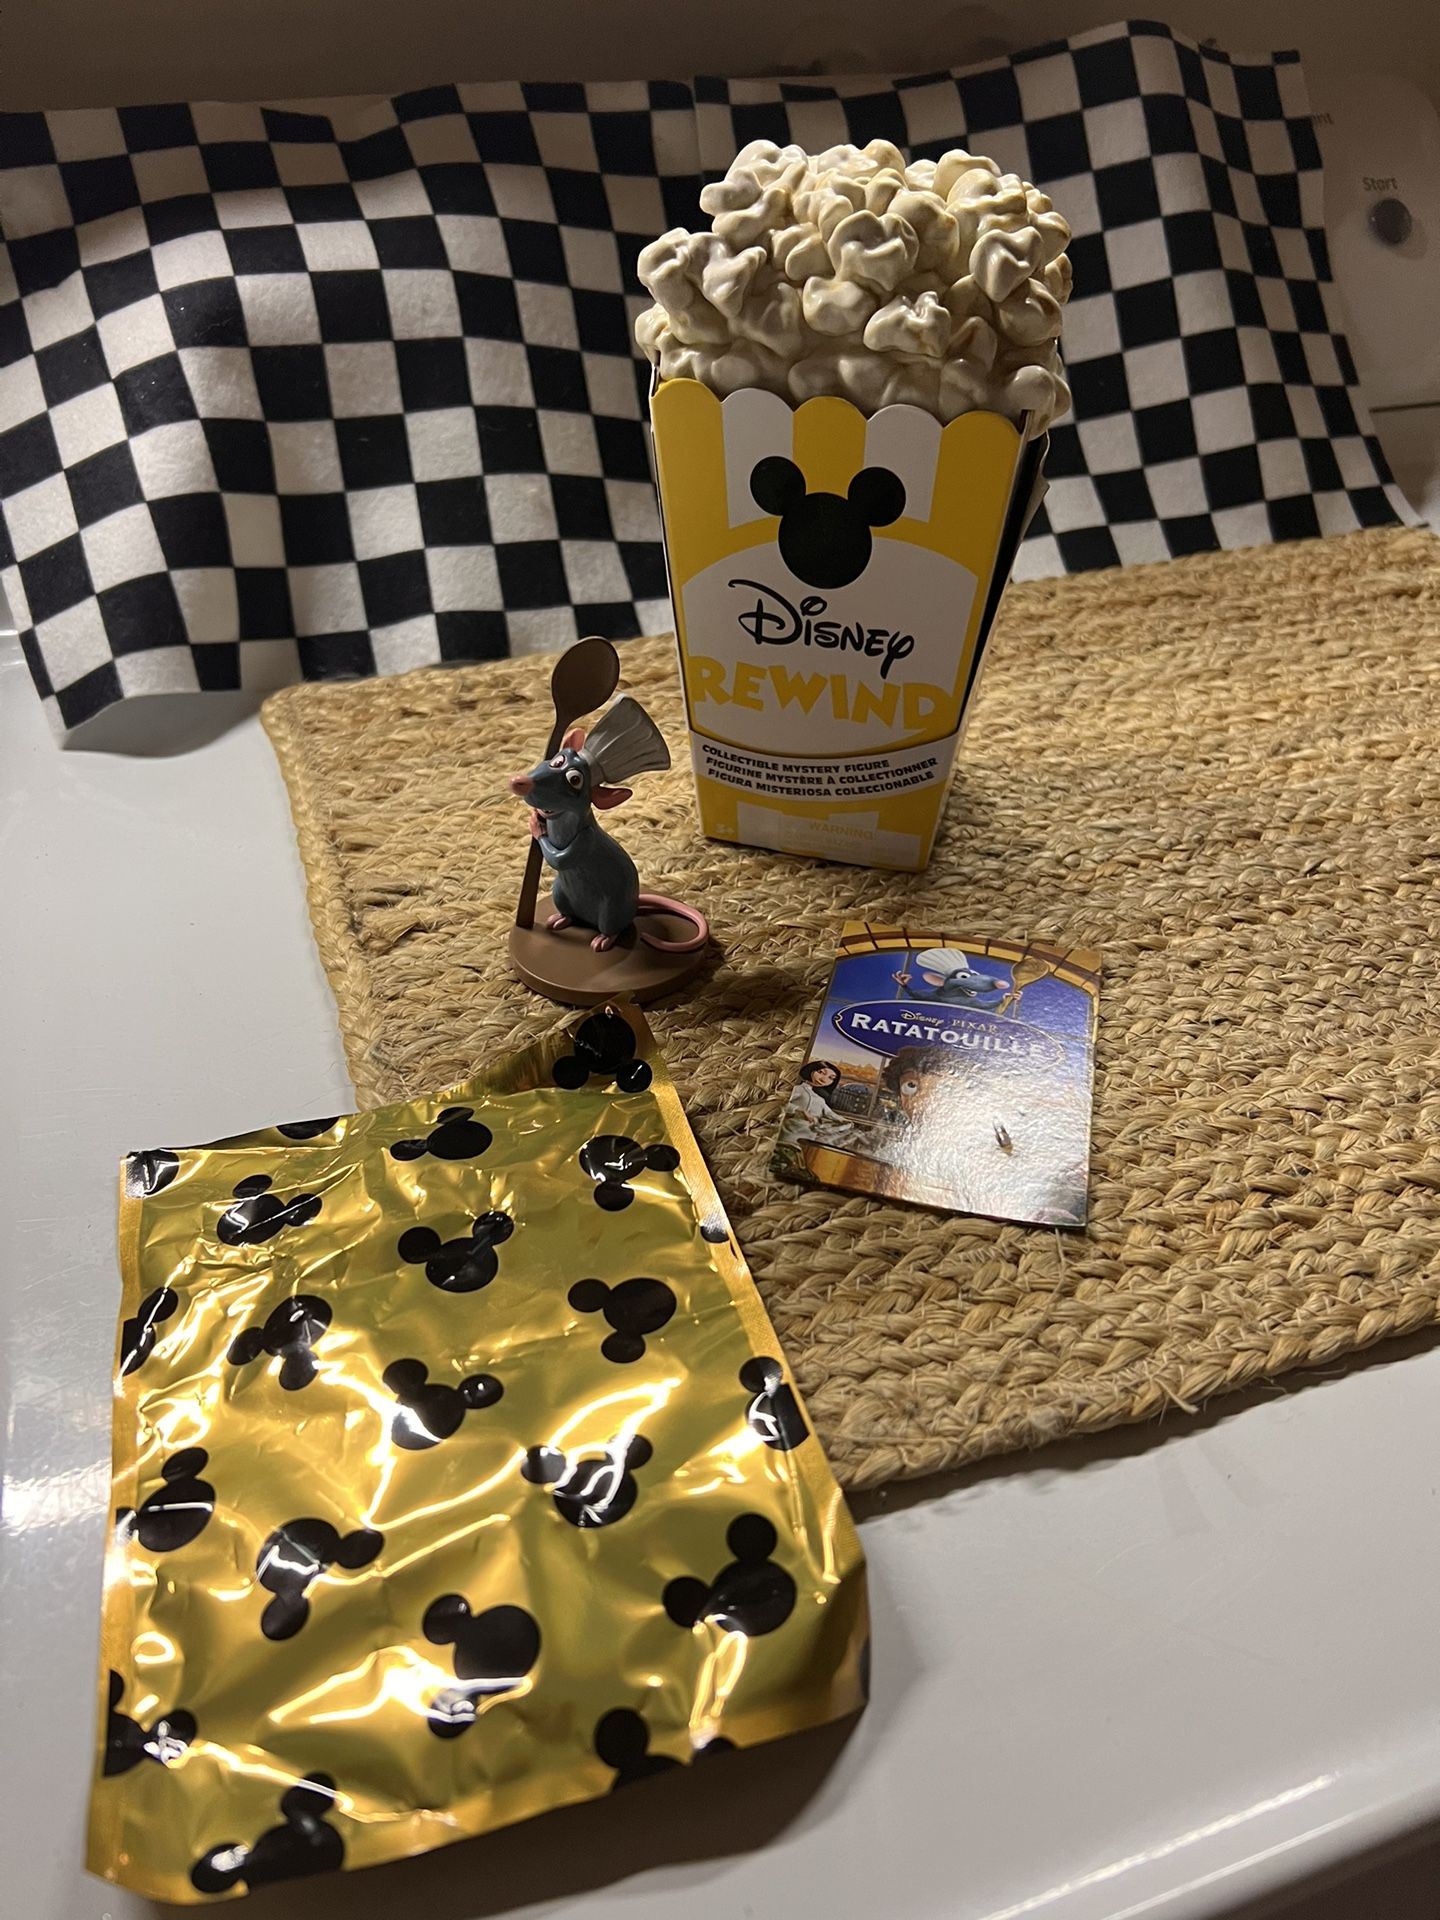 Disney Rewind Collectible Figure In Popcorn Bucket - Ratatouille